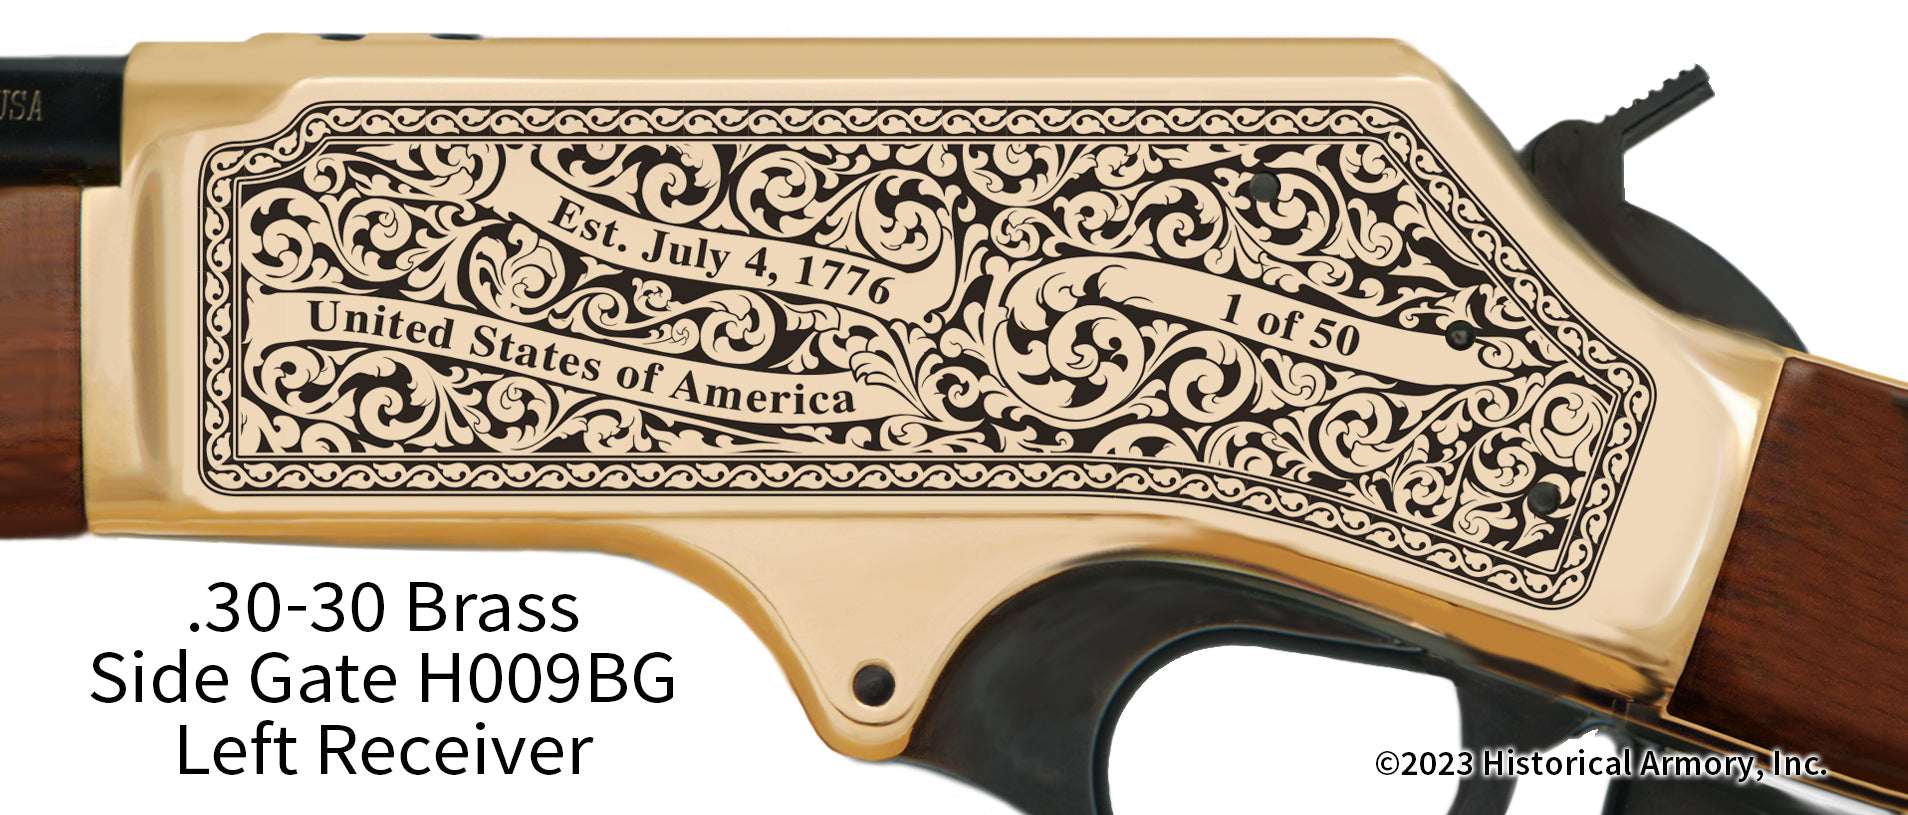 Putnam County Missouri Engraved Henry .30-30 Brass Side Gate Rifle